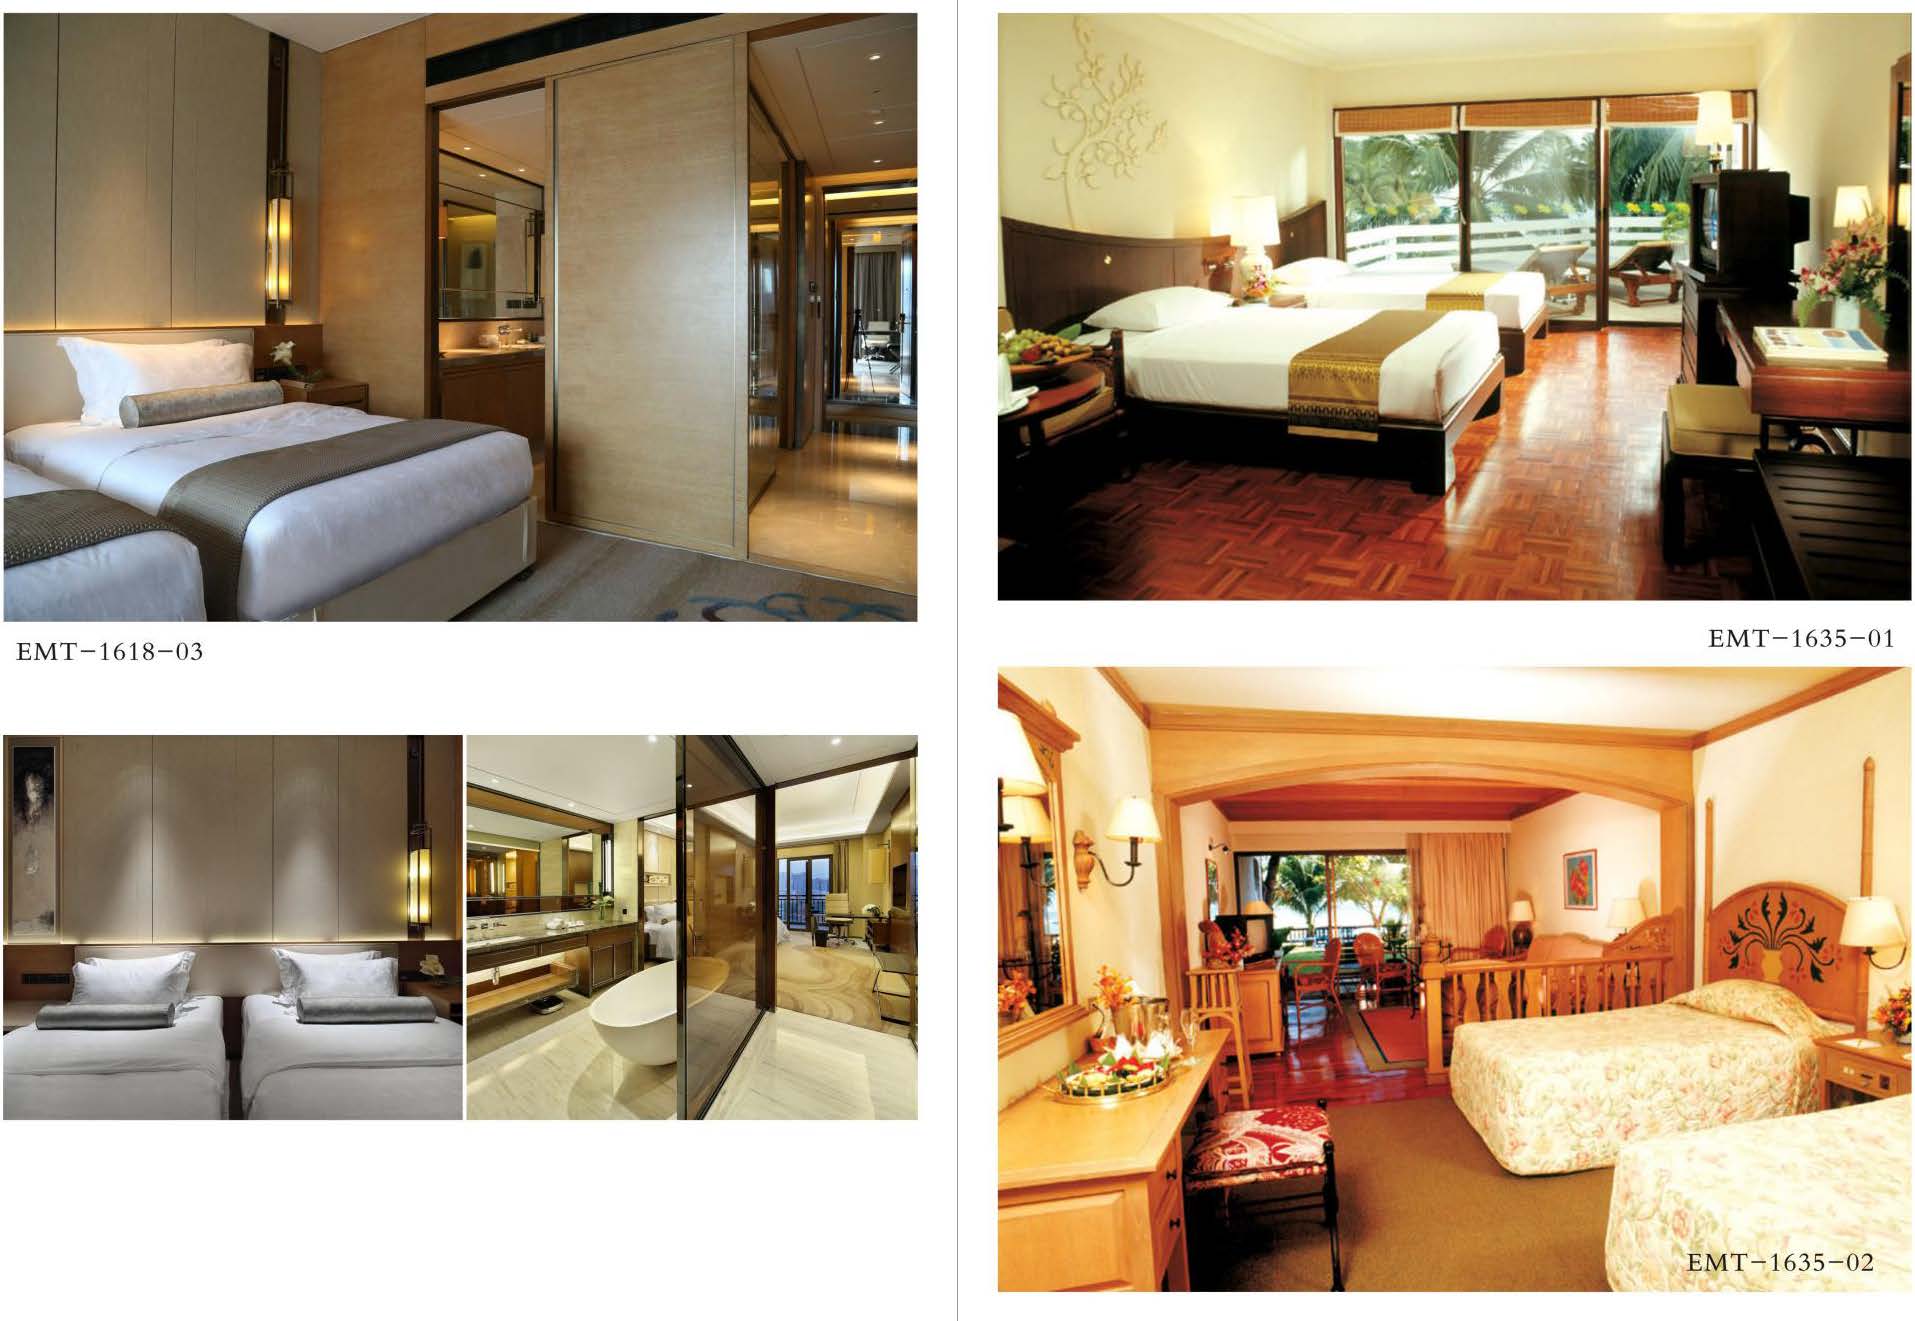 Bedroom for Luxury Hotel